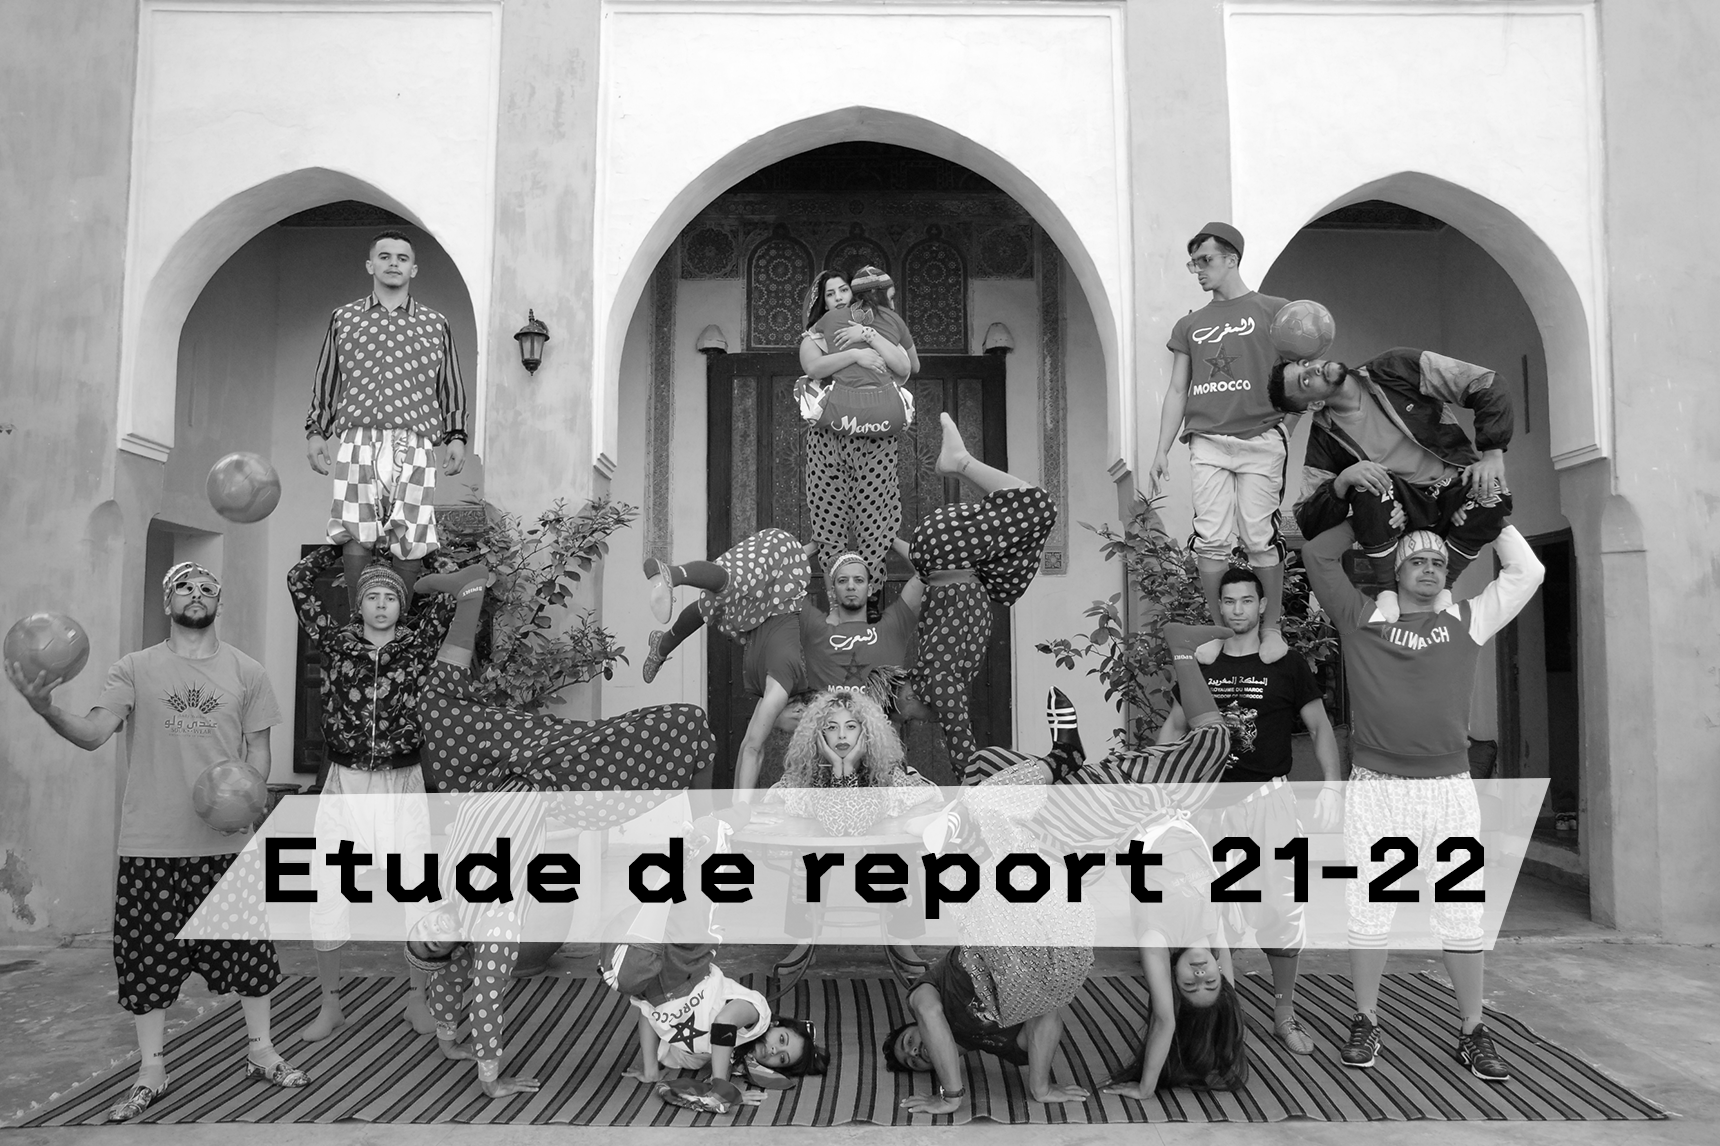 FIQ ! - Groupe acrobatique de Tanger
Maroussia Diaz Verbeke